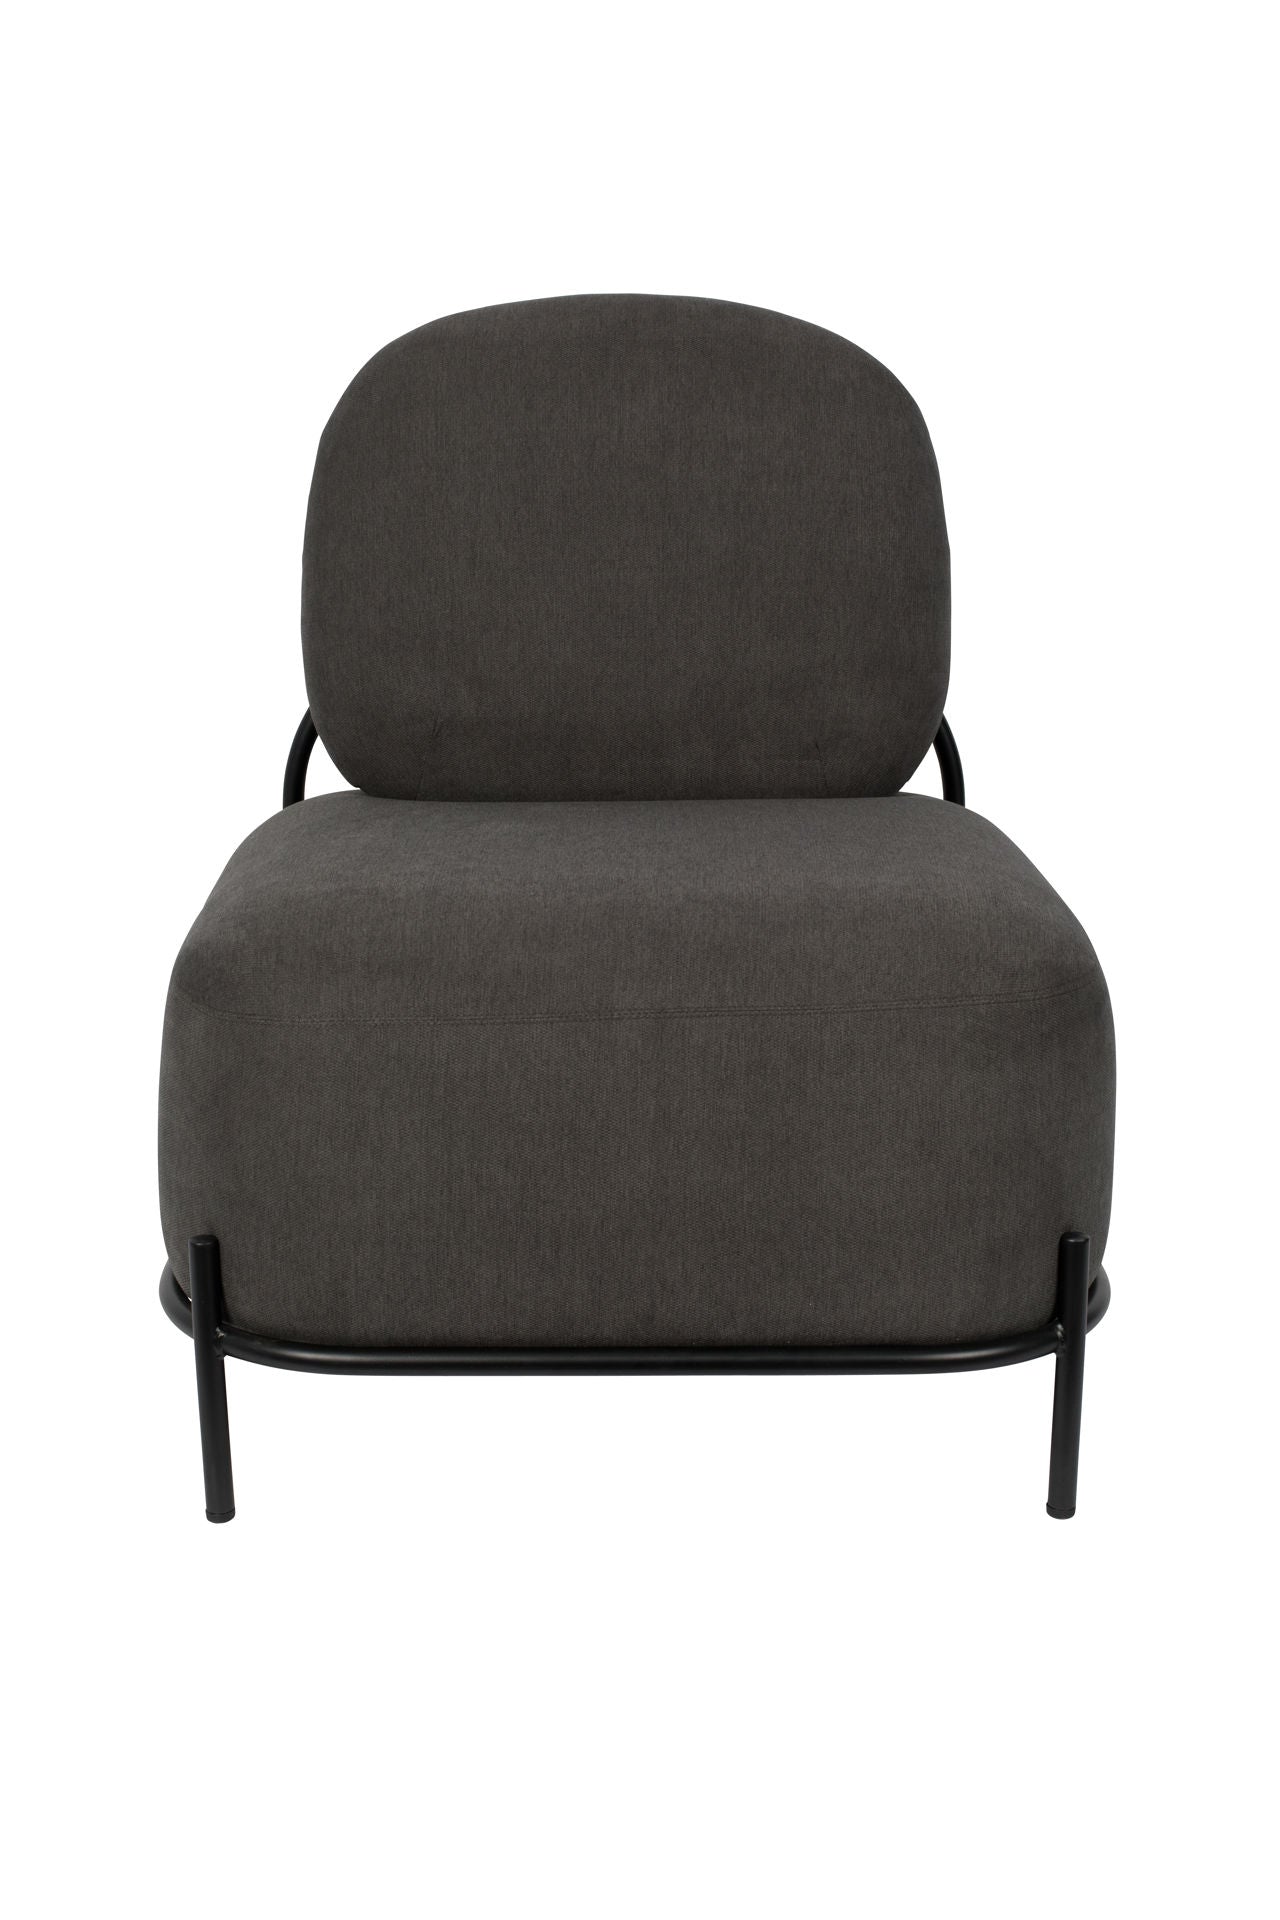 Nancy's Viera East Lounge Chair - Modern - Gray - Polyester, Plywood, Iron - 71.5 cm x 66 cm x 77 cm